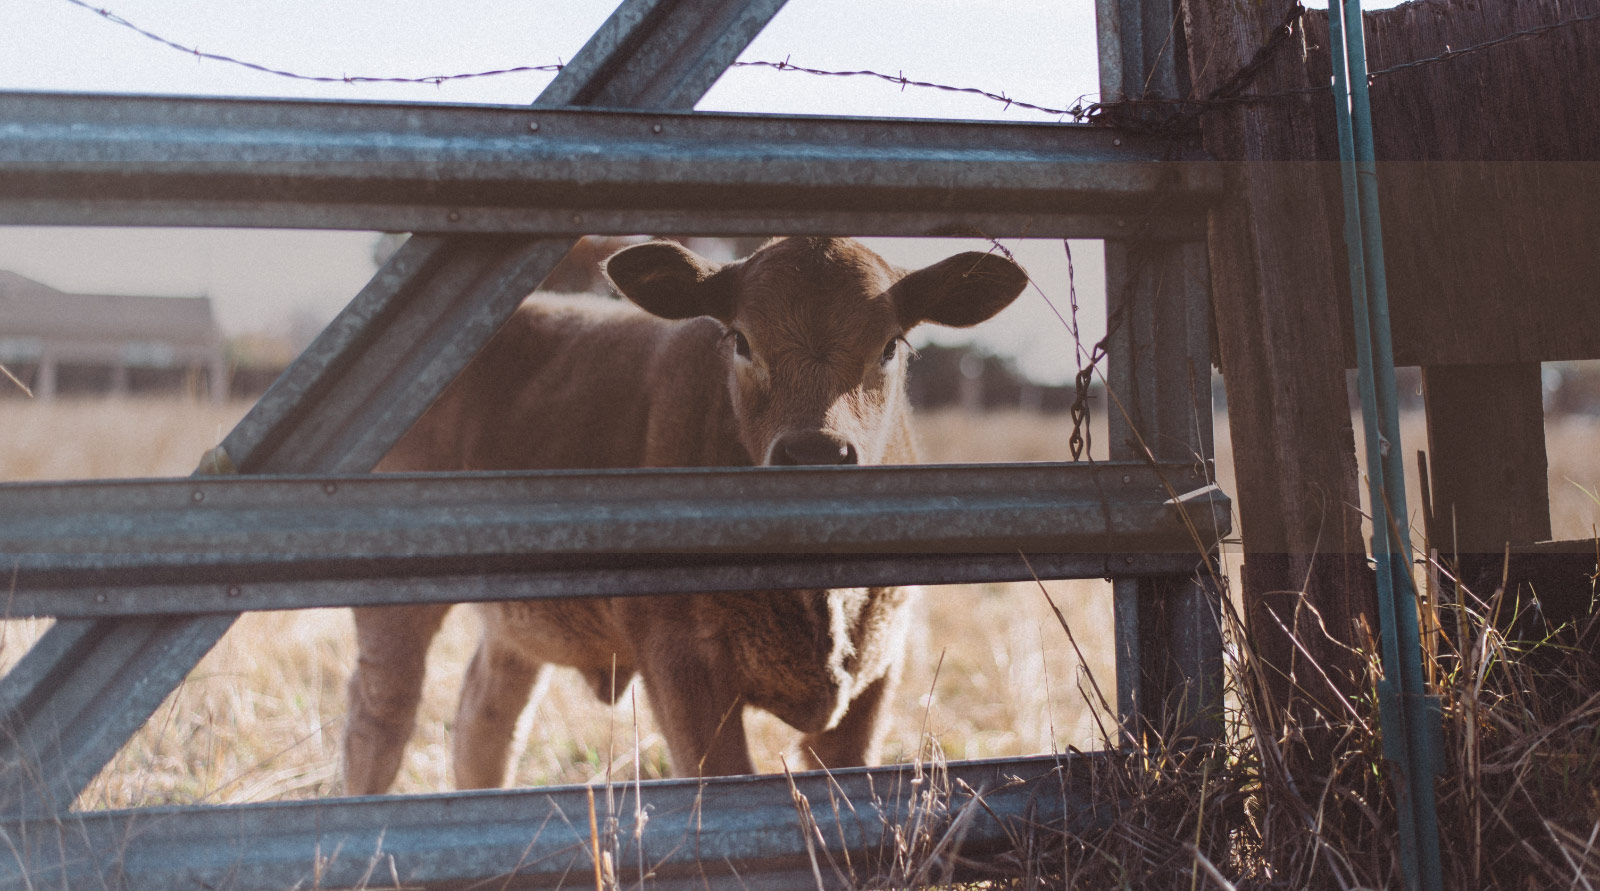 A cow peering through a fence